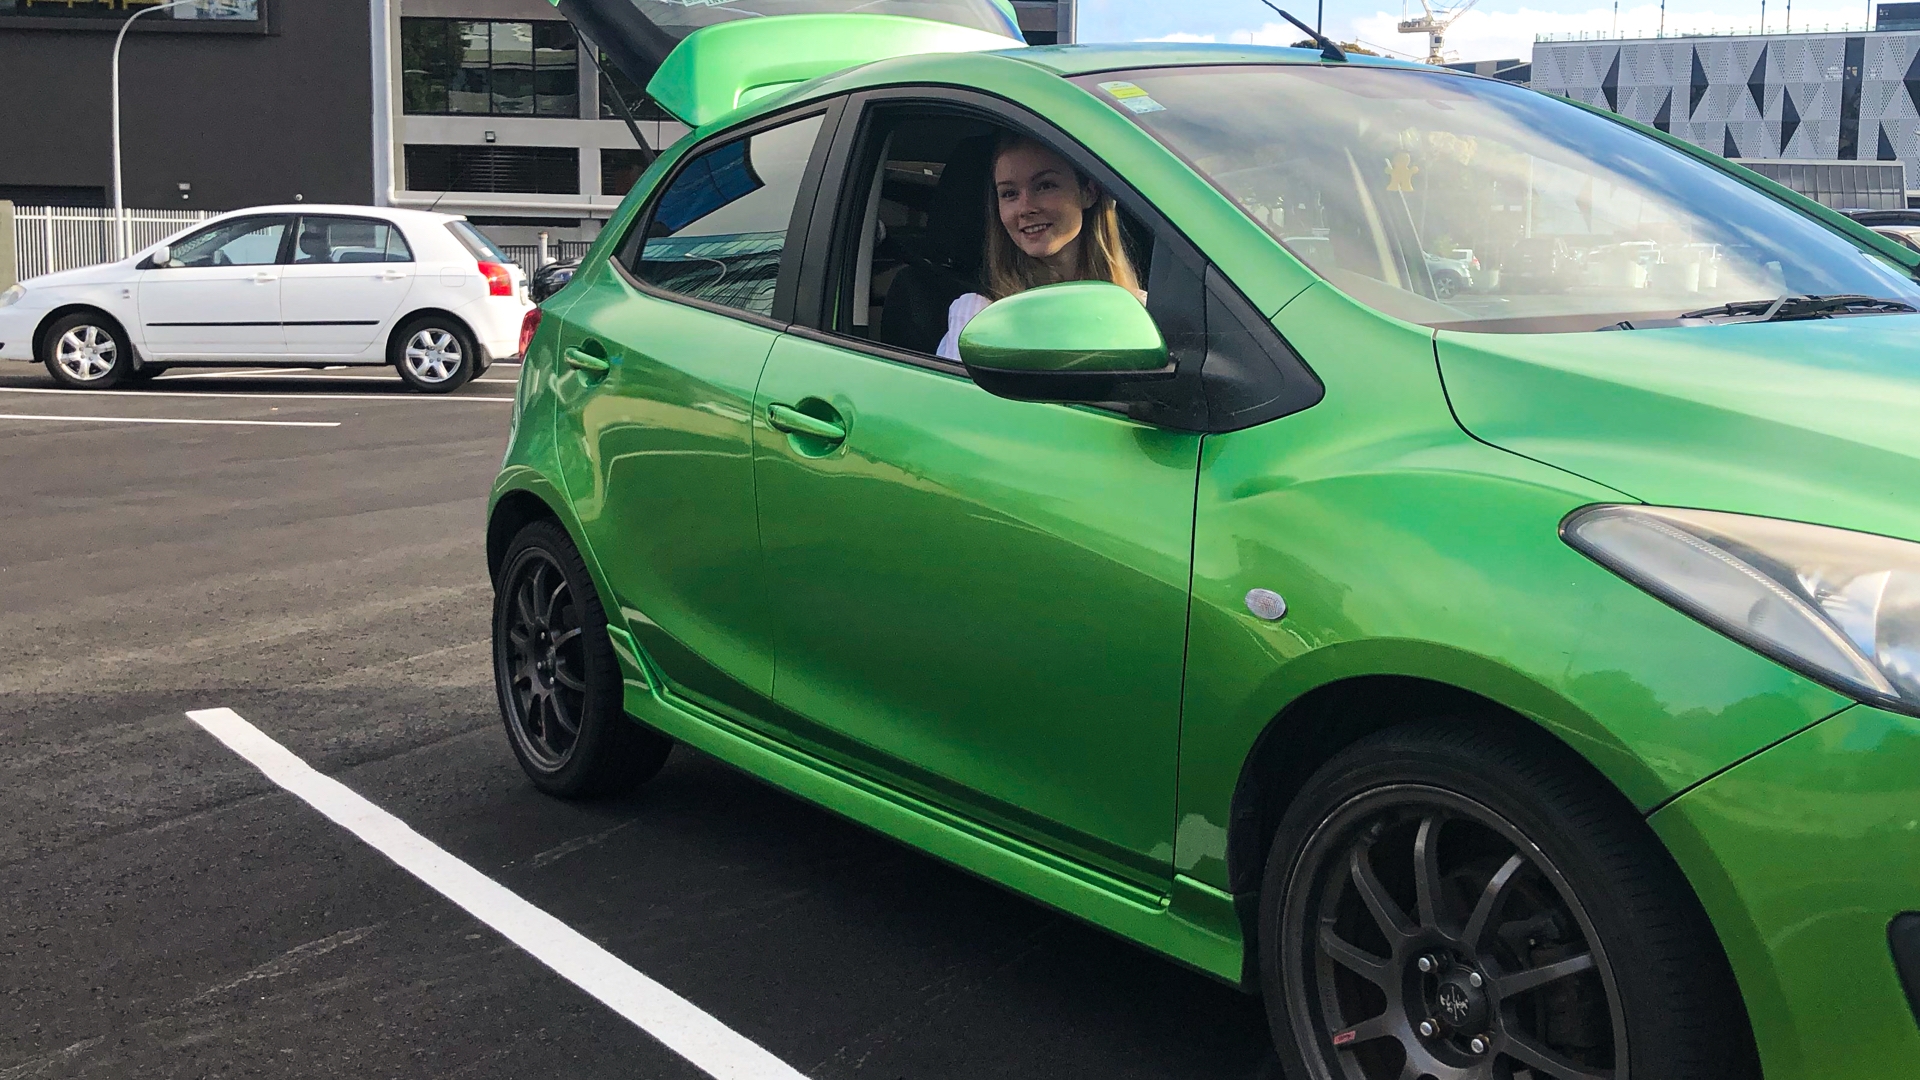 Lady behind wheel of green car